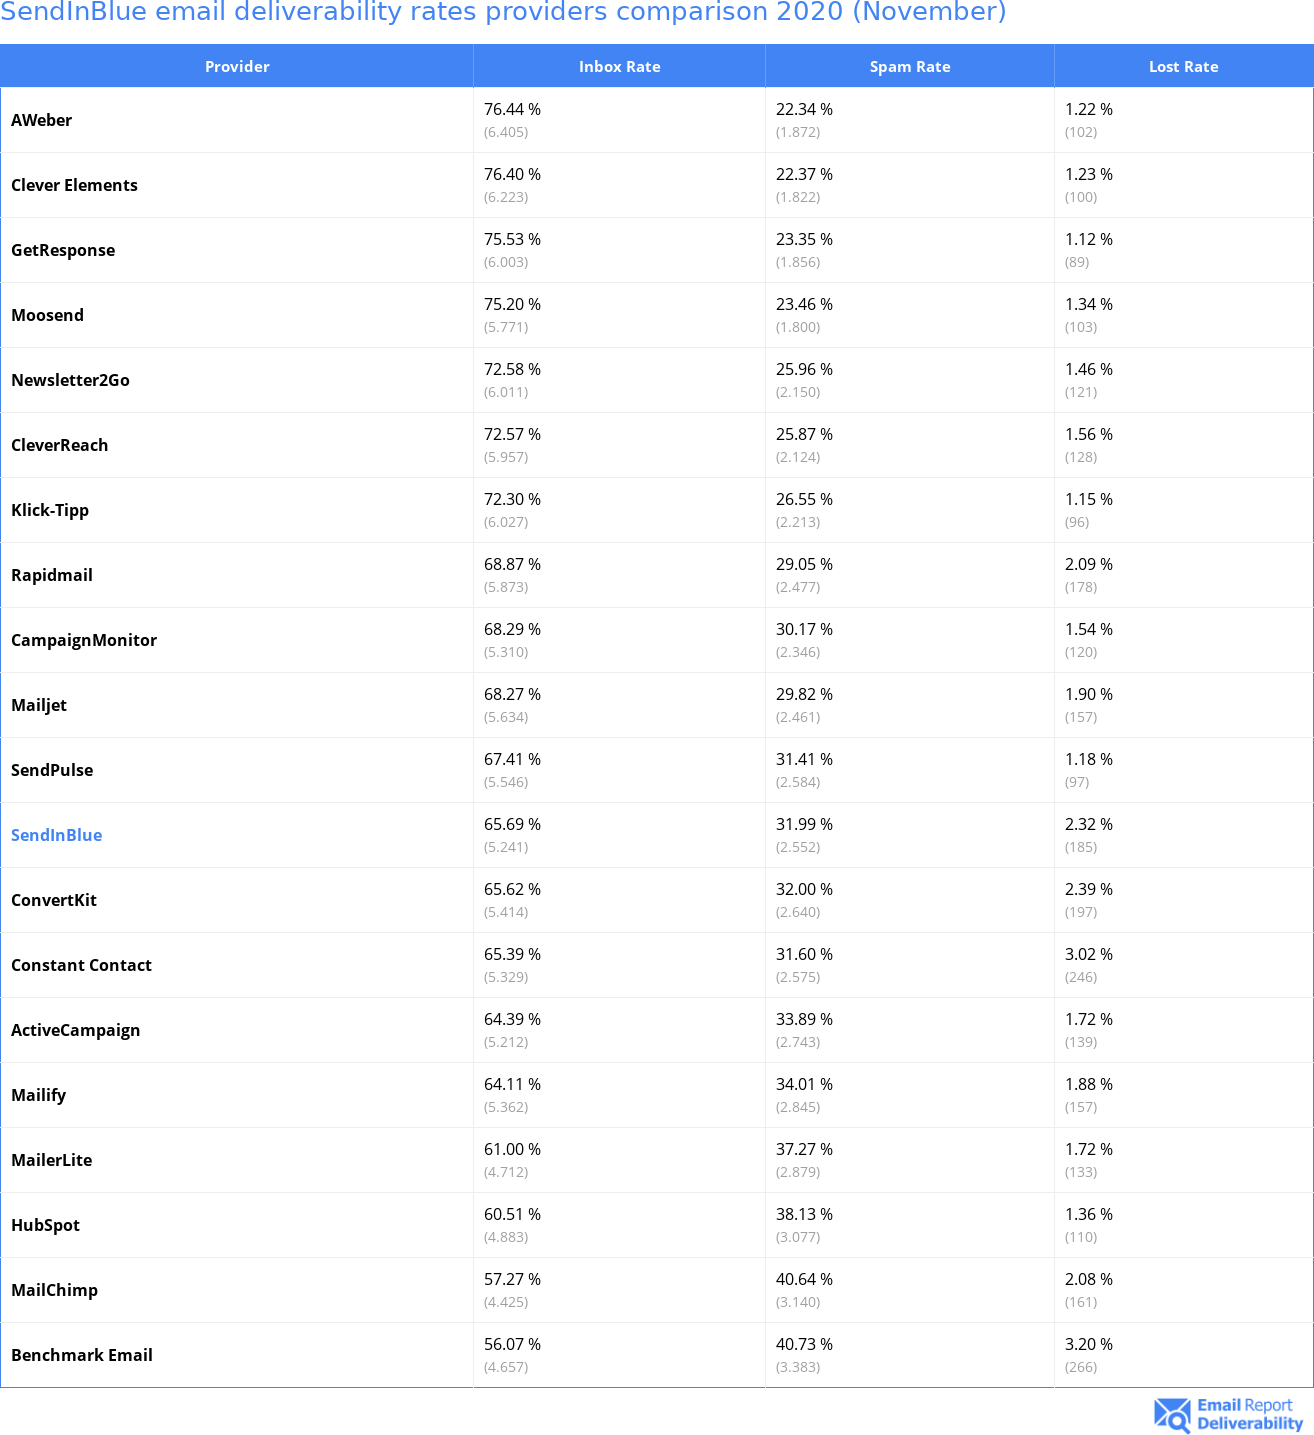 SendInBlue email deliverability rates providers comparison 2020 (November)